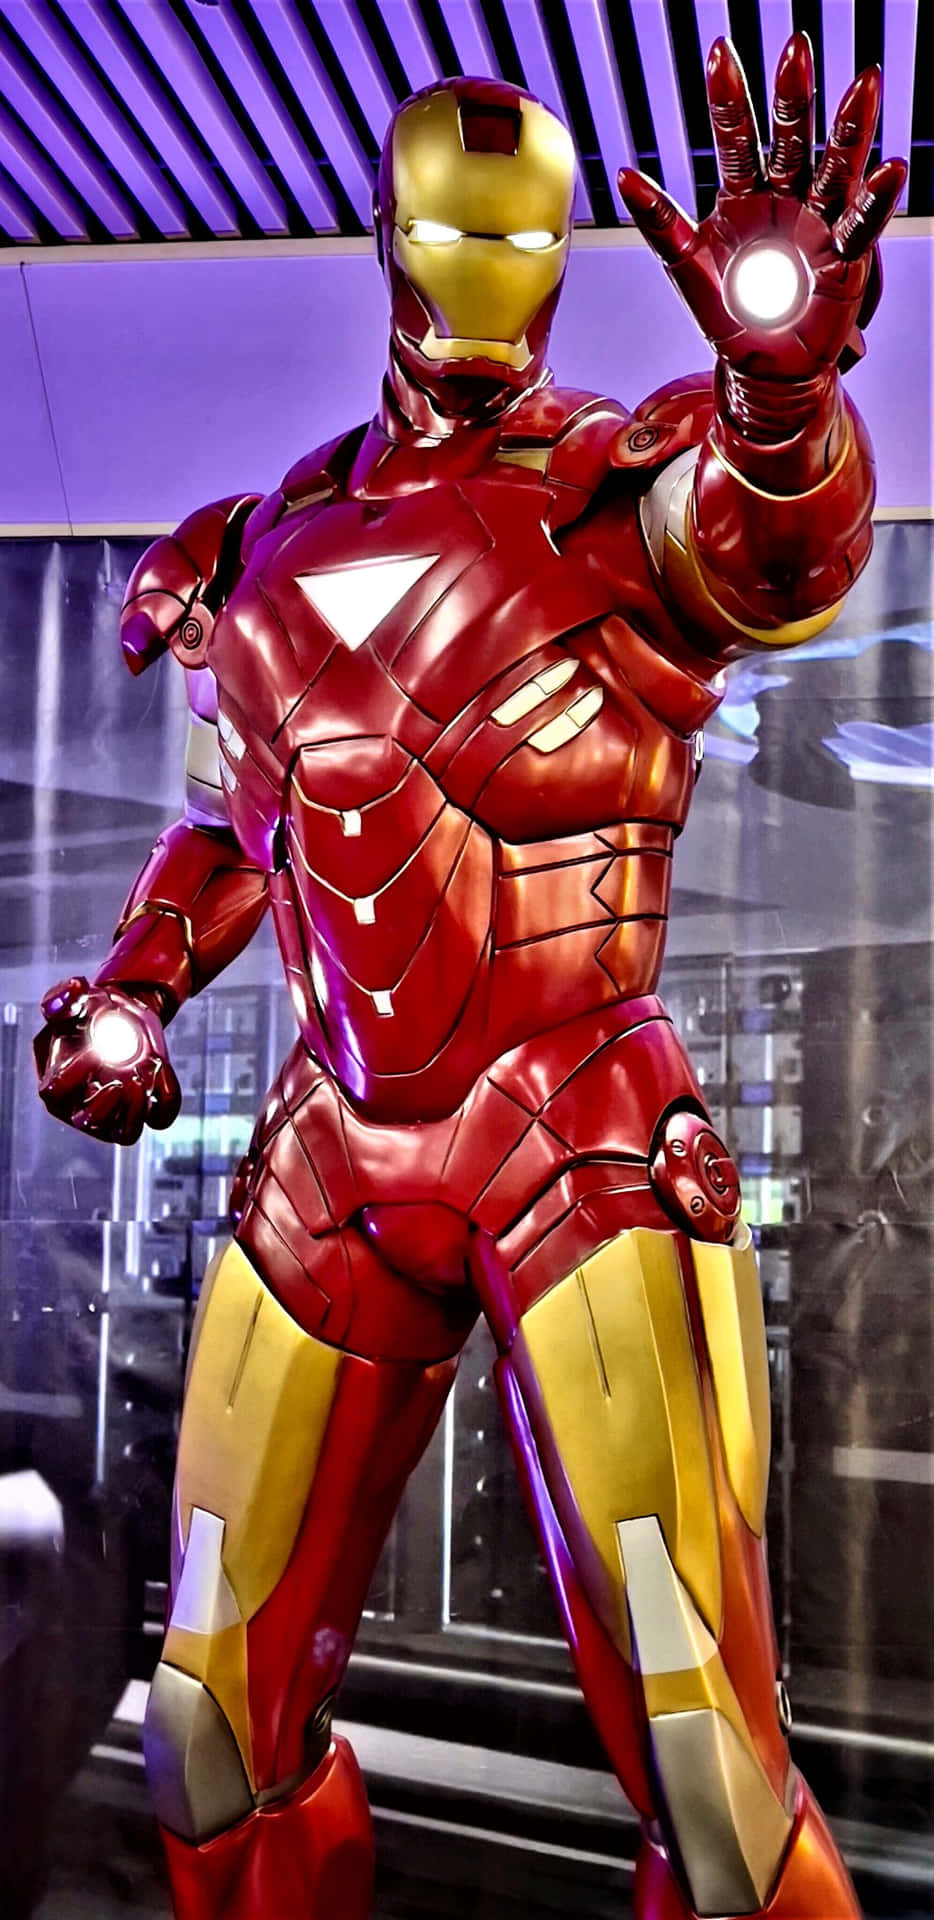 Pixel3xl Marvel Bakgrund Iron Man I Hans Laboratorium.